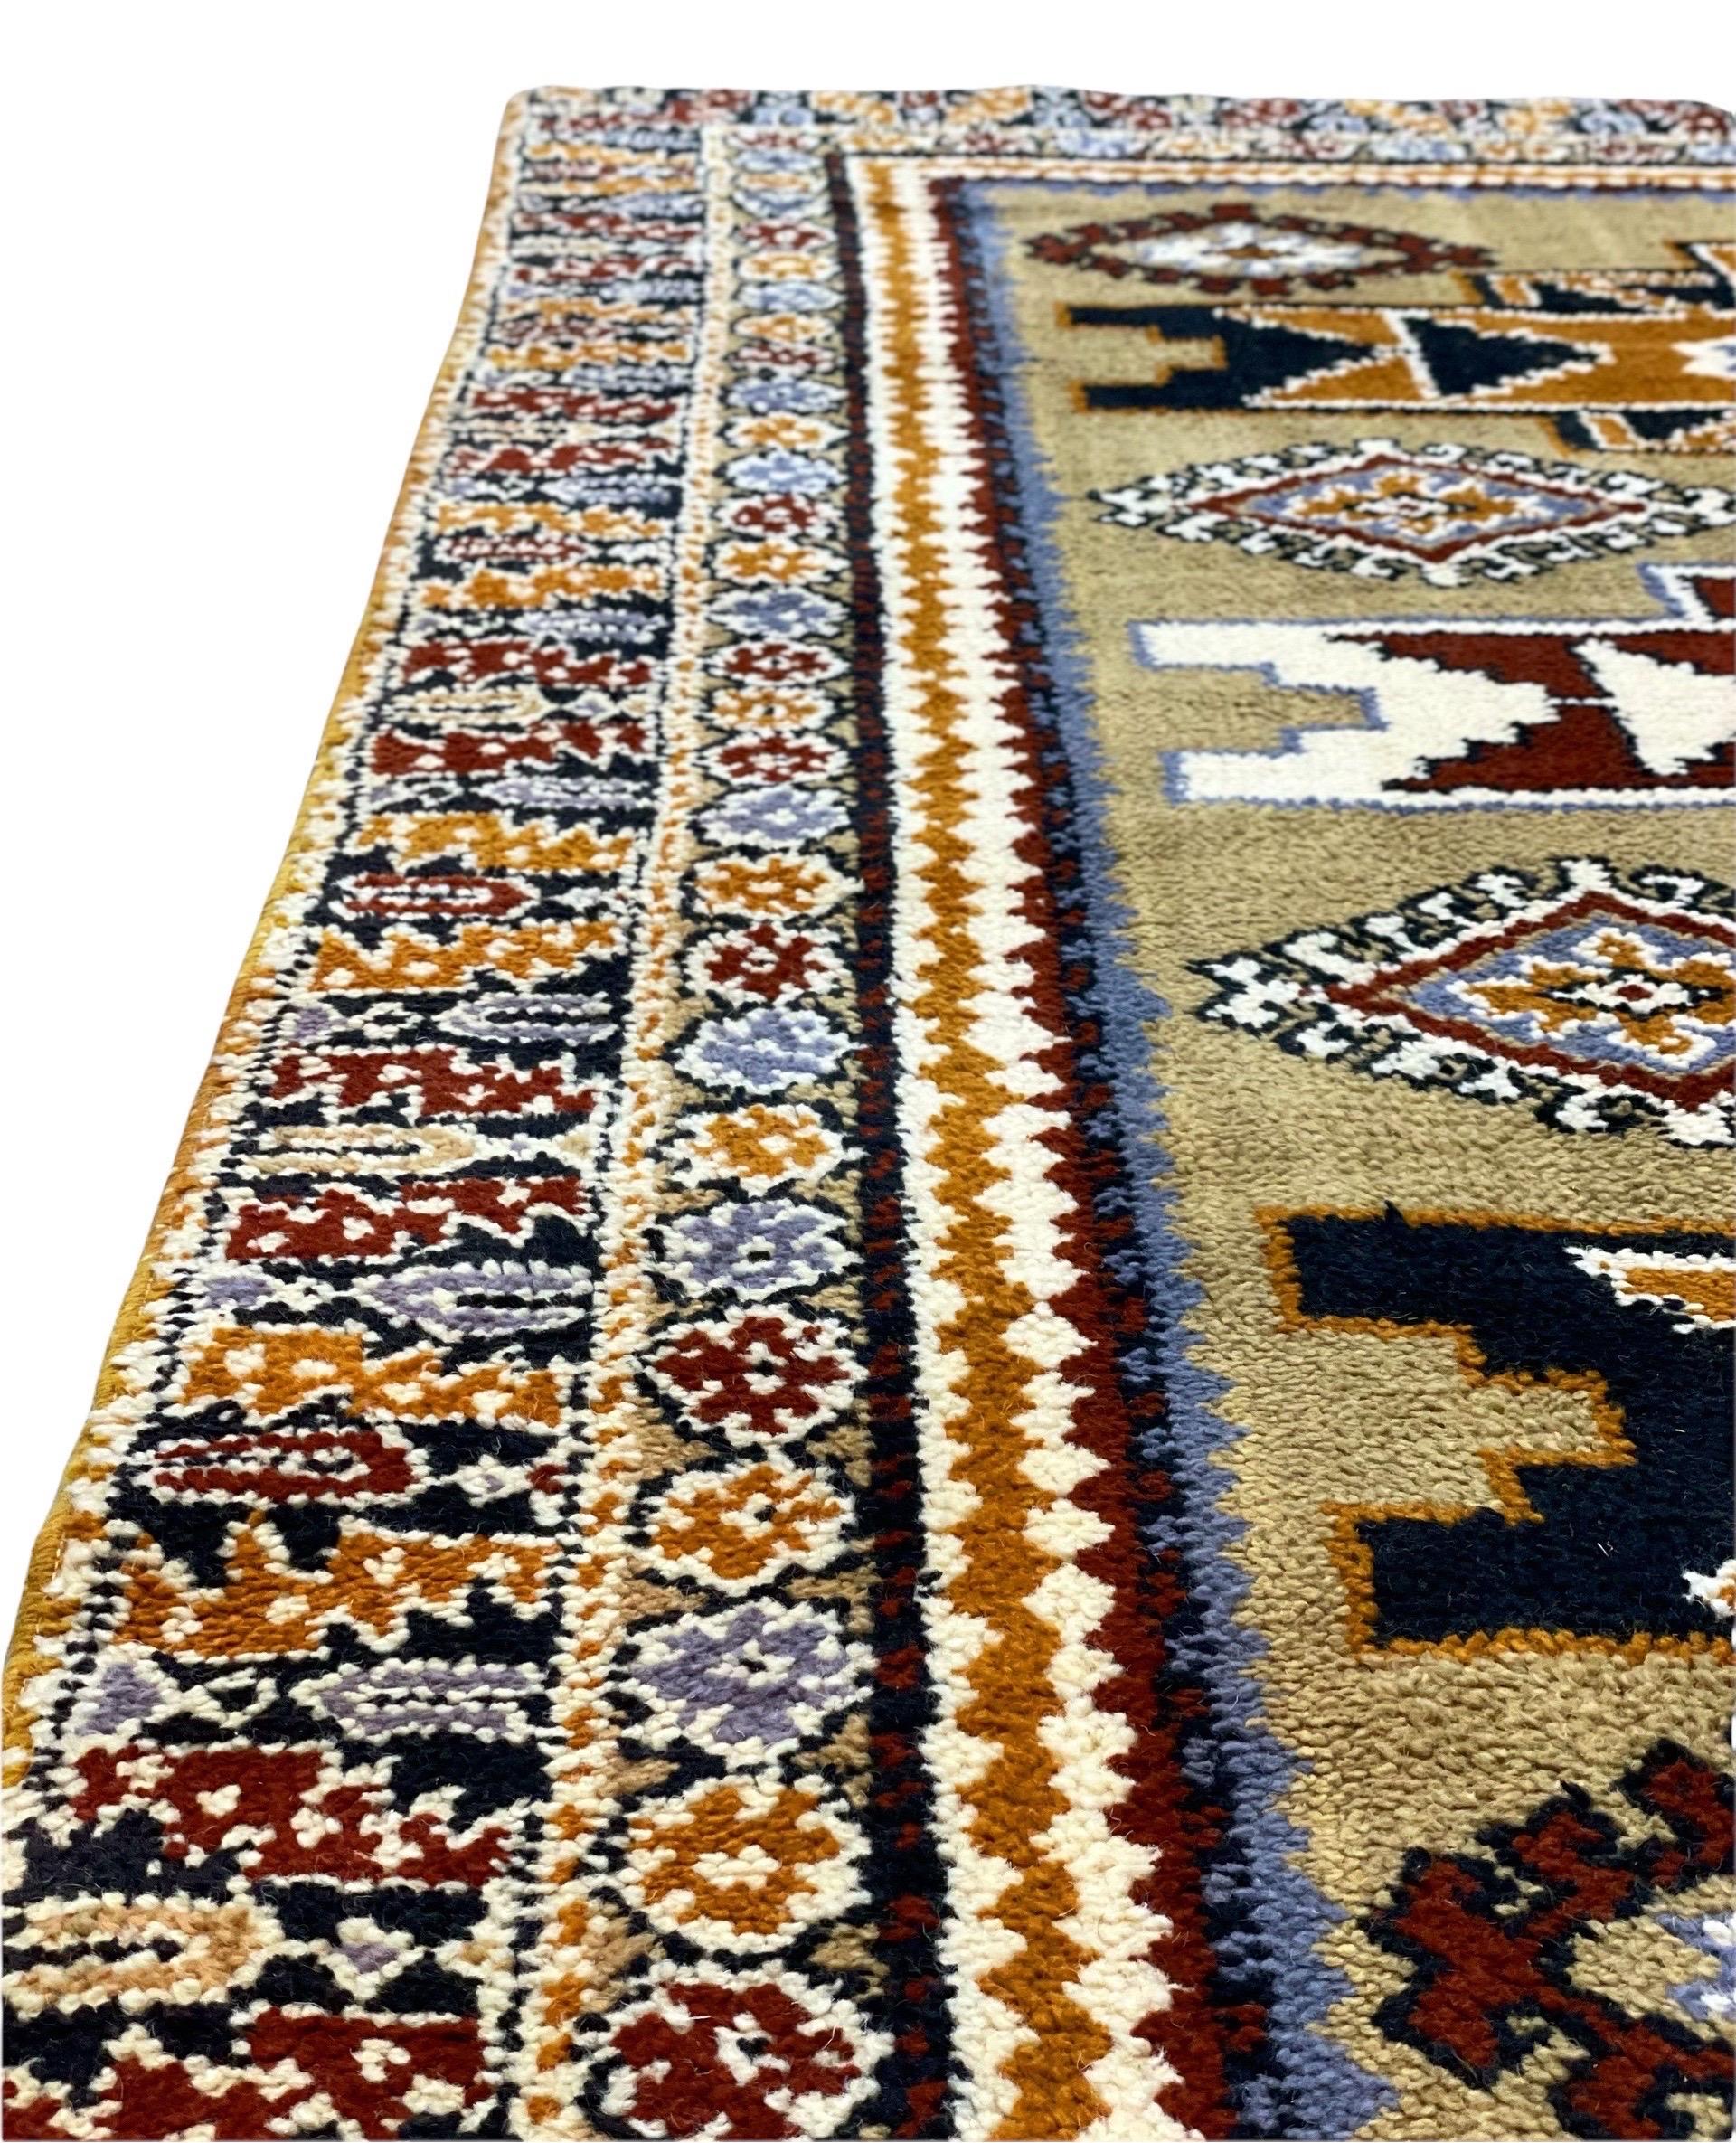 Amazing Mid-Century Modern wool area rug designed by John Freeman for Concepts International 